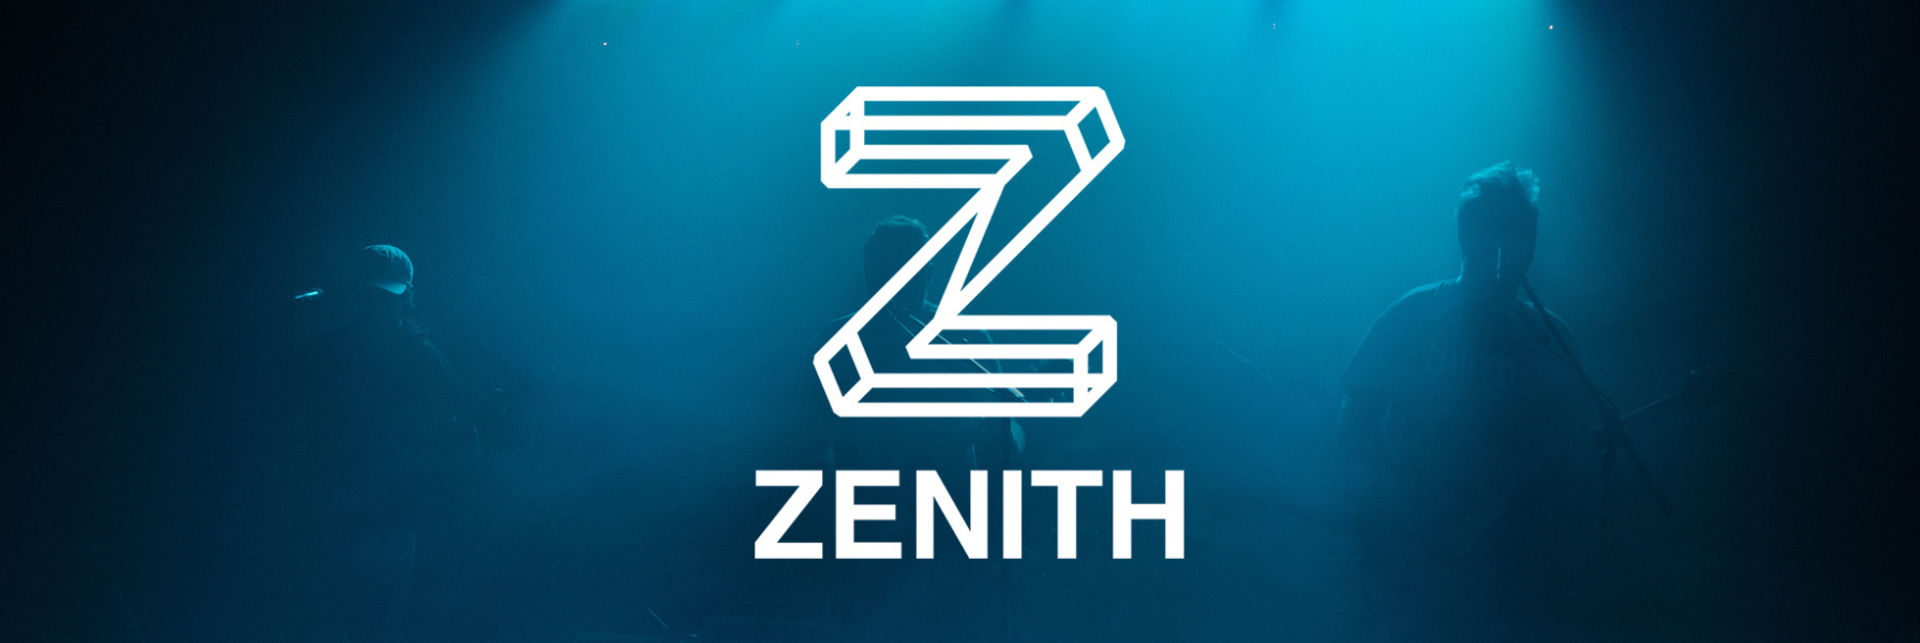 JH Zenith